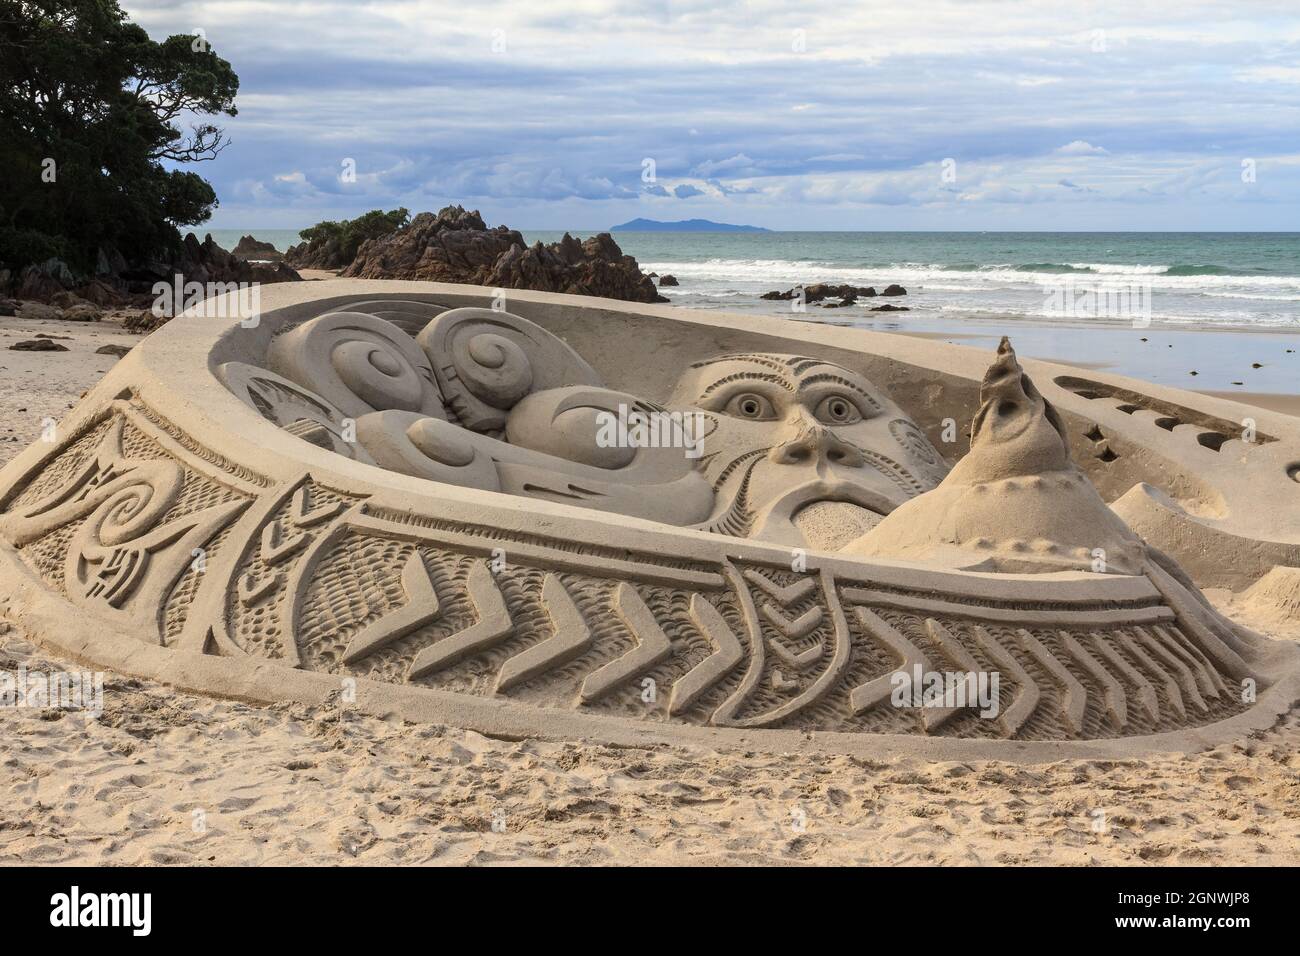 A sand sculpture with Maori motifs on Mount Maunganui Beach, New Zealand Stock Photo